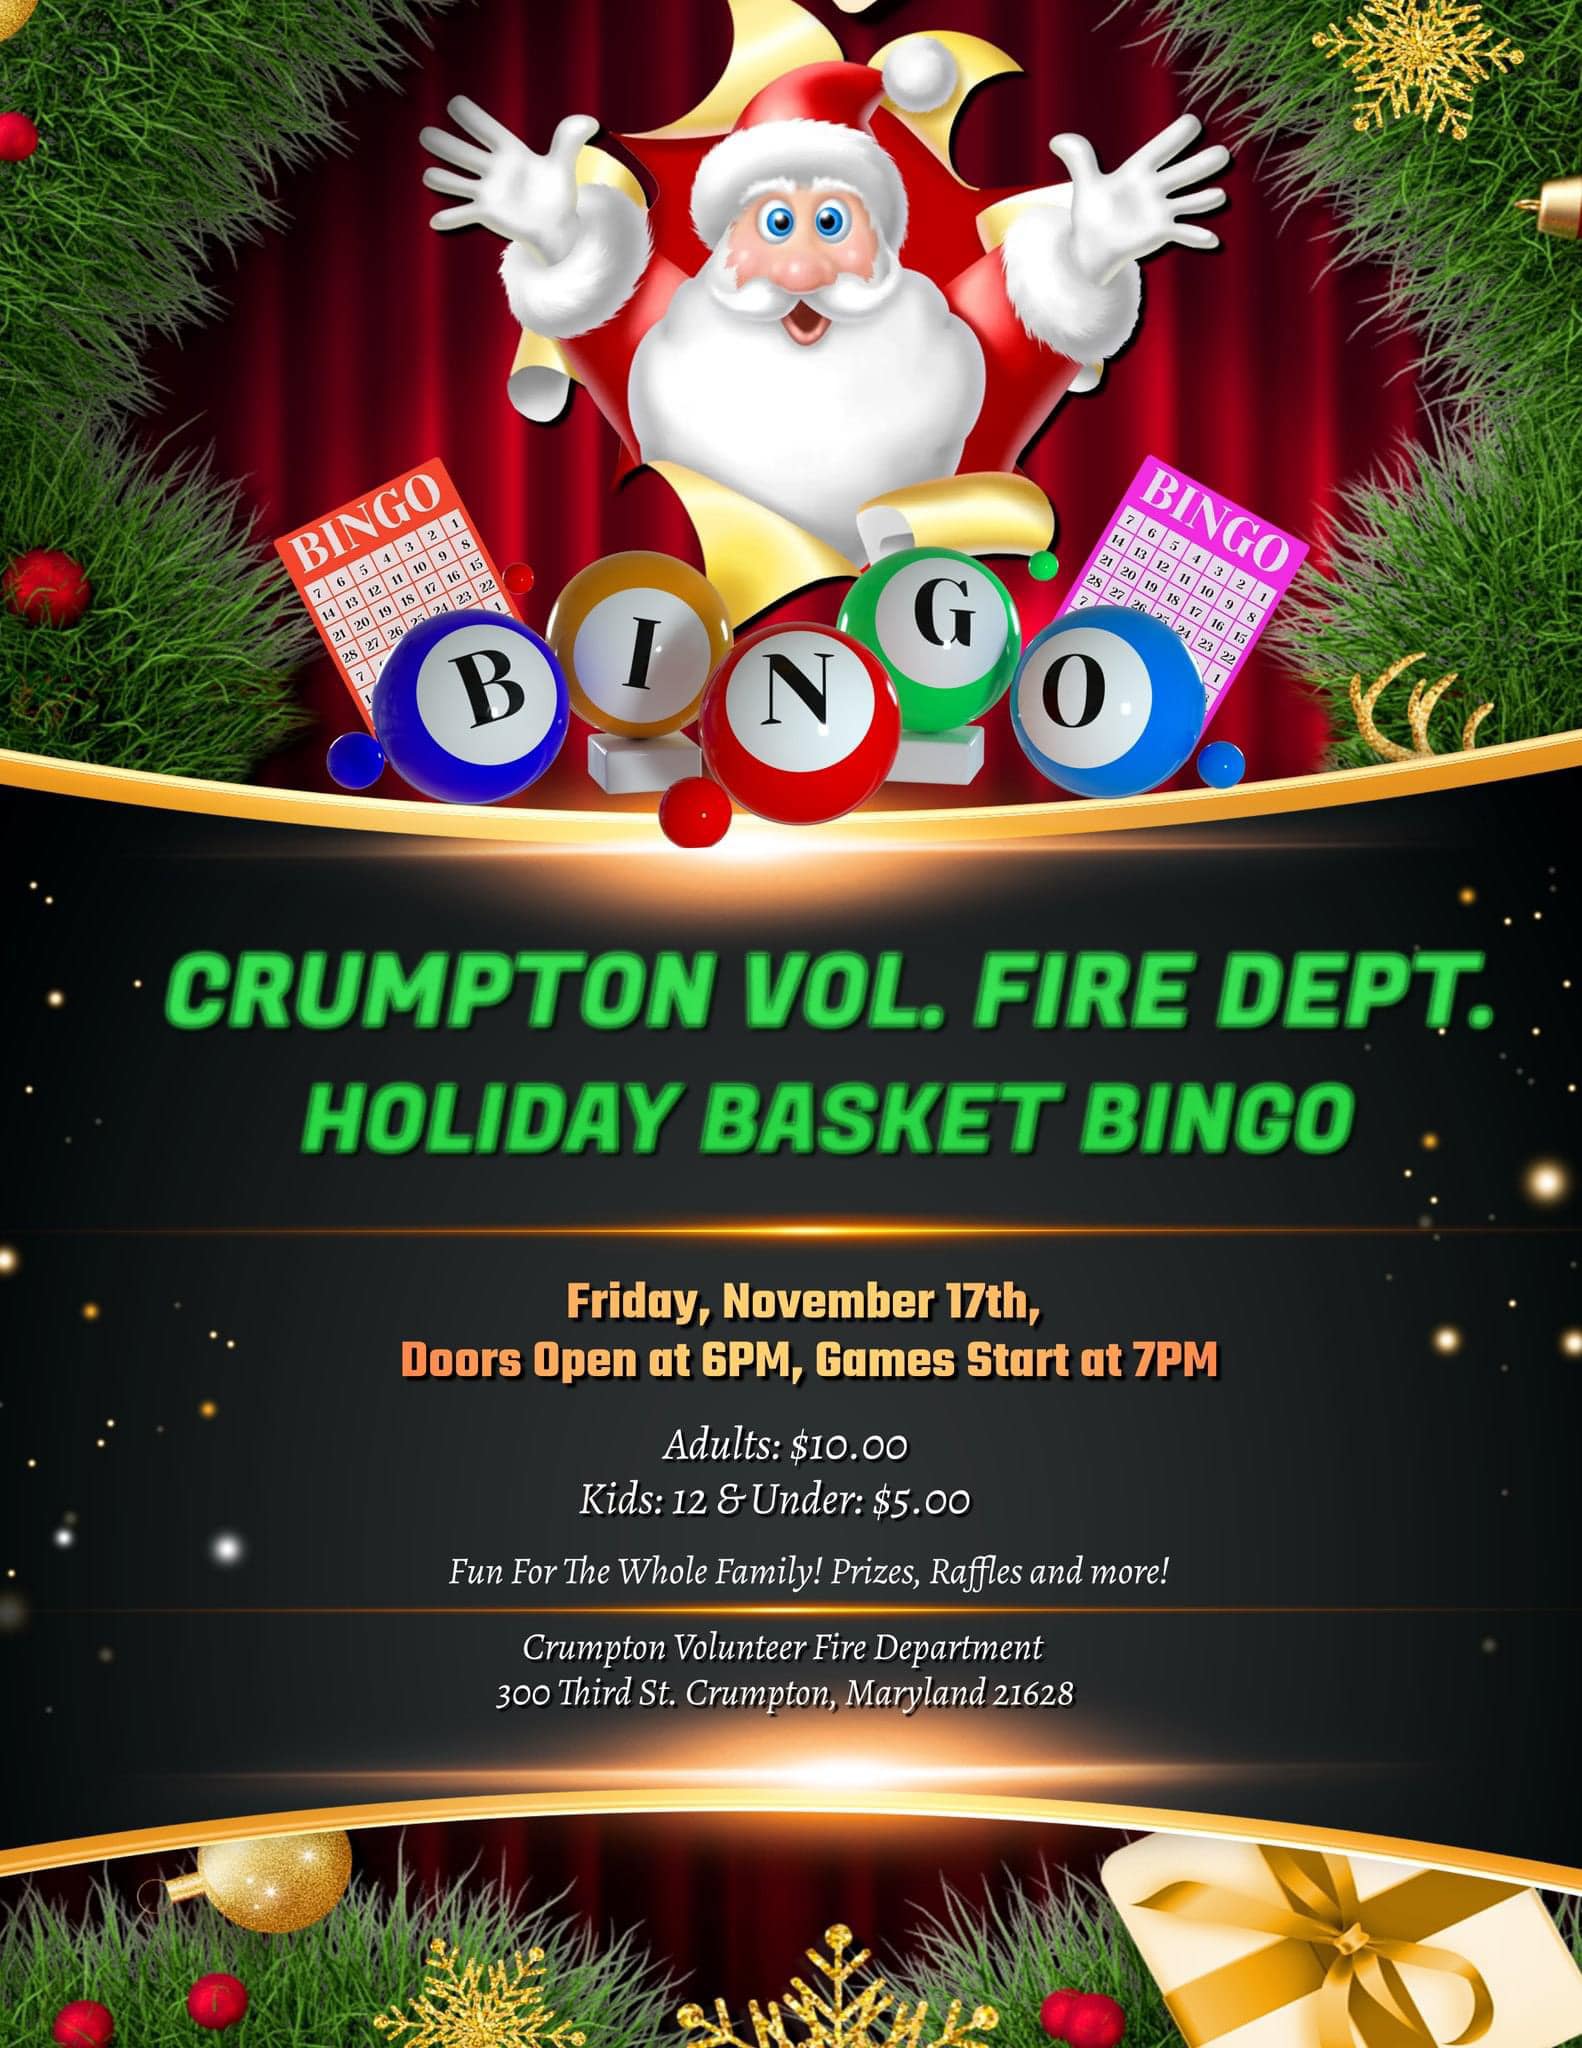 Crumpton Holiday Bingo VFD